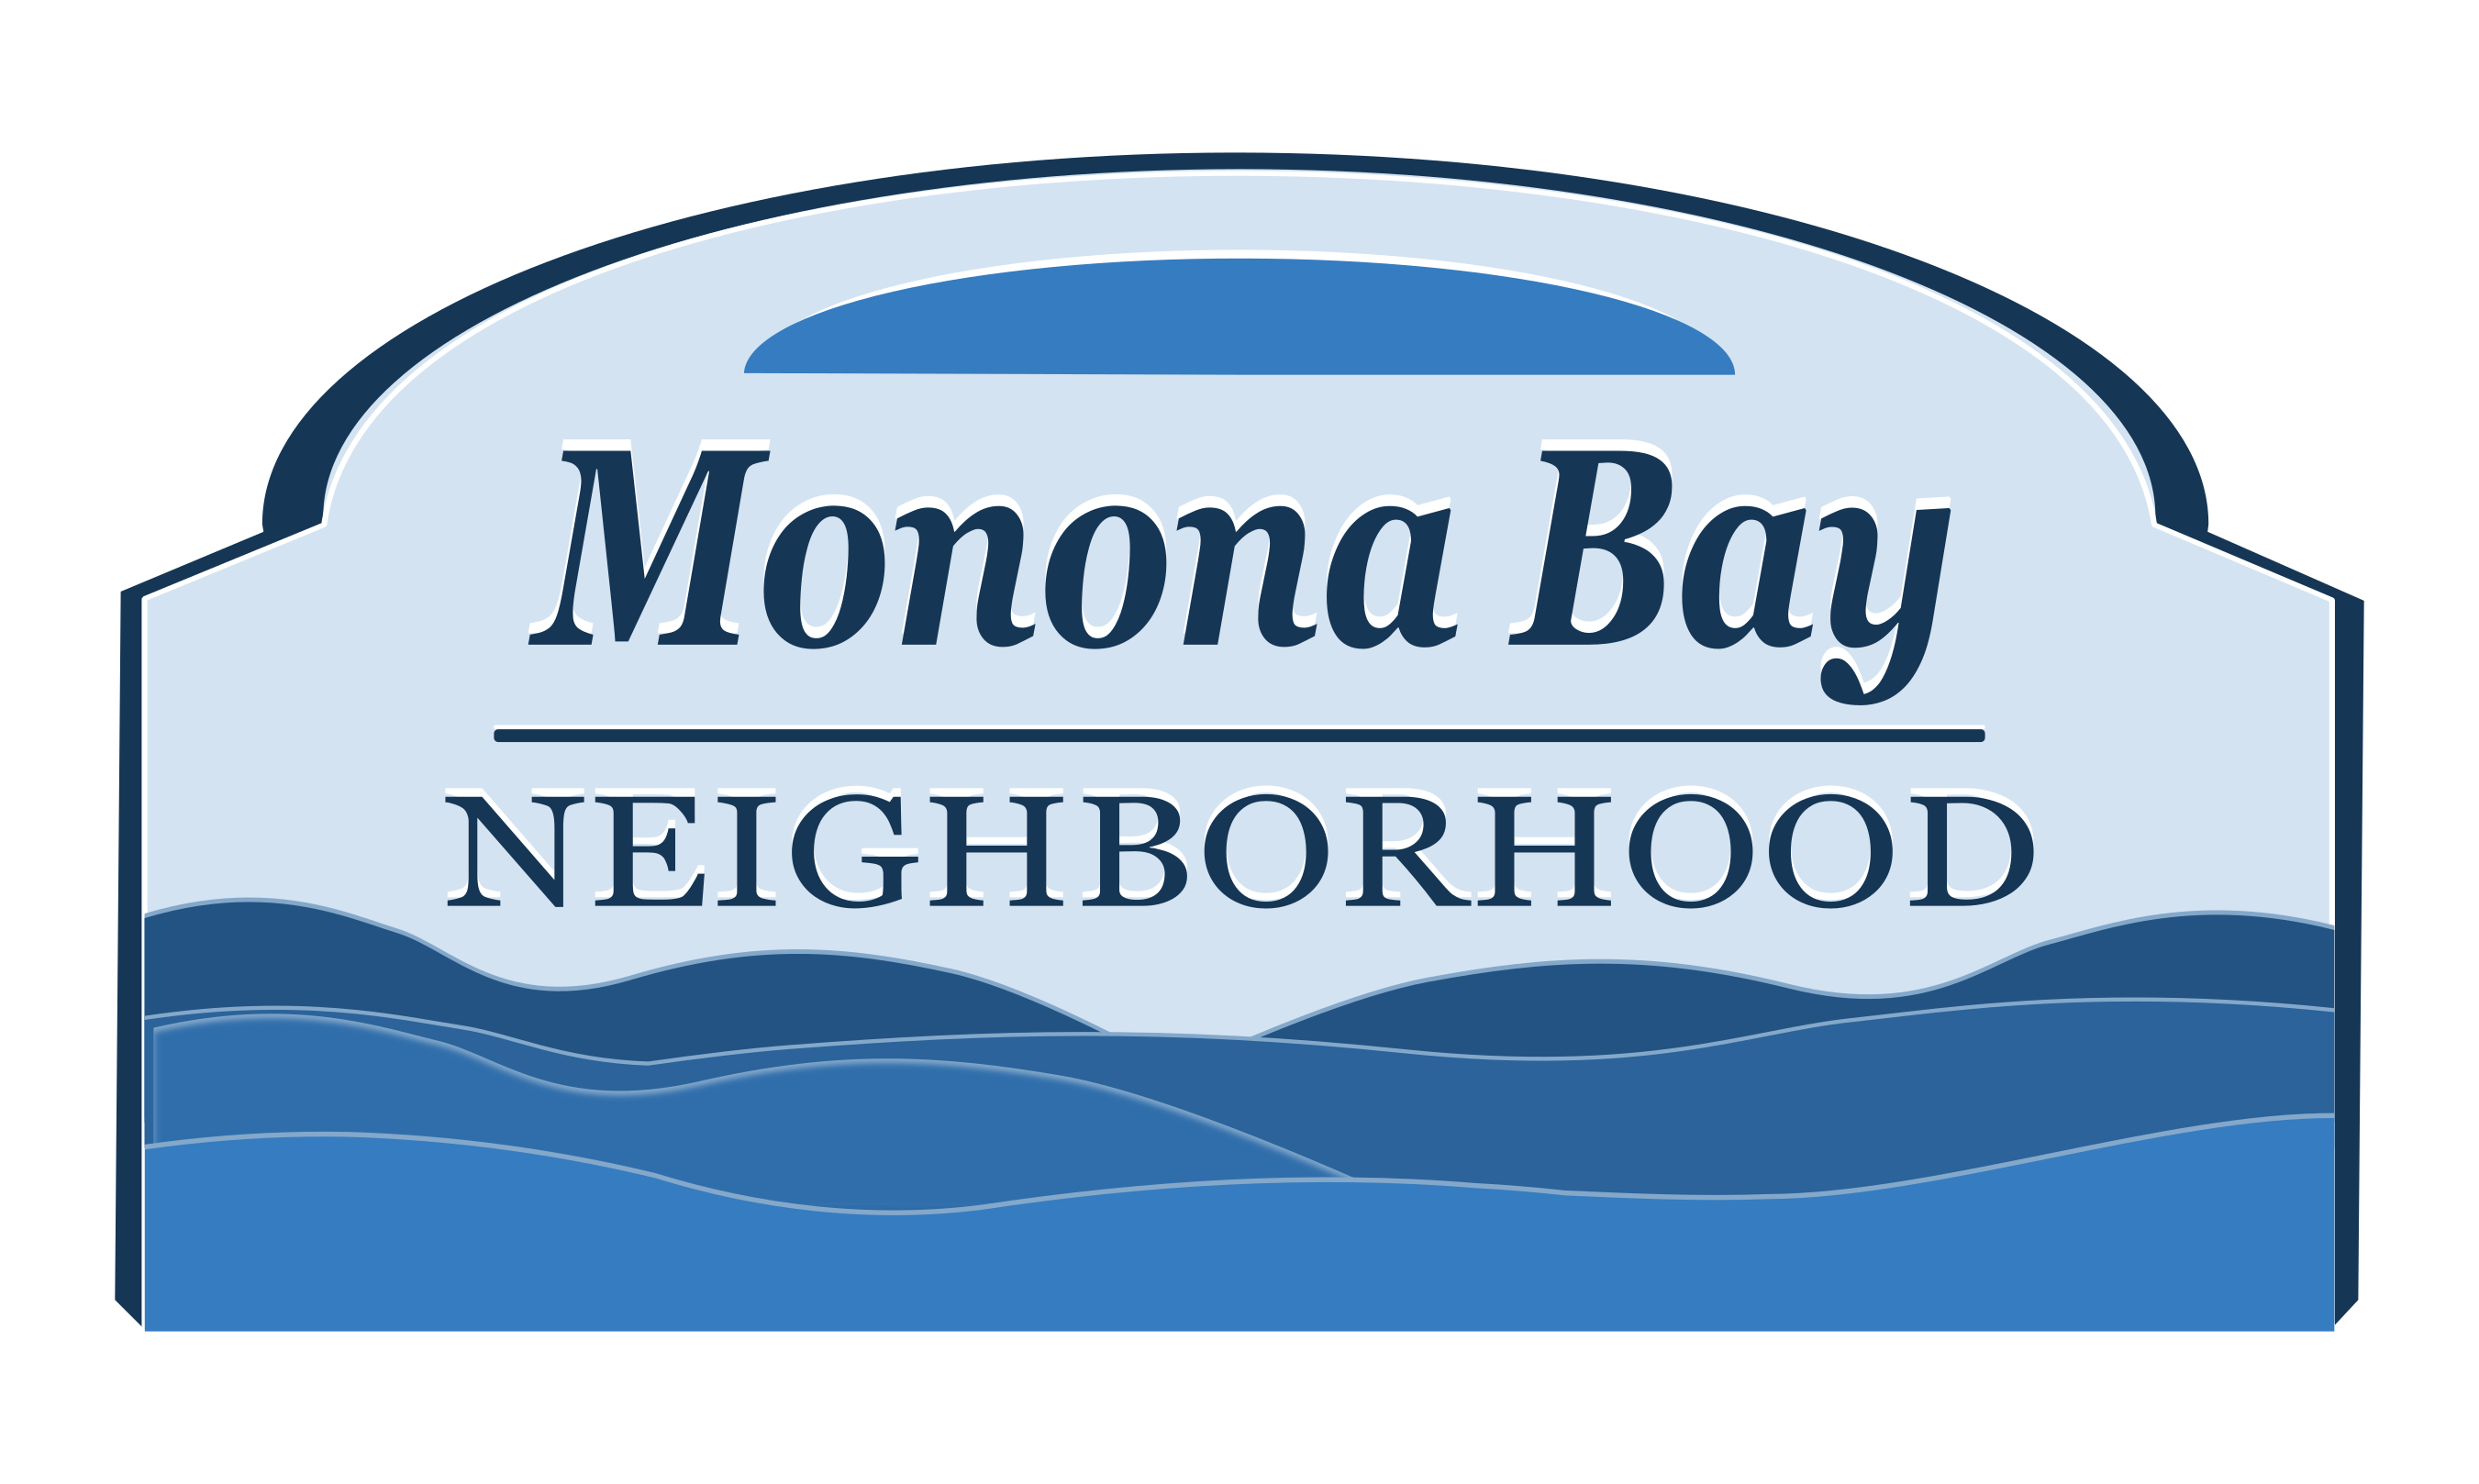 Monona Bay Neighborhood — At Home by the Bay